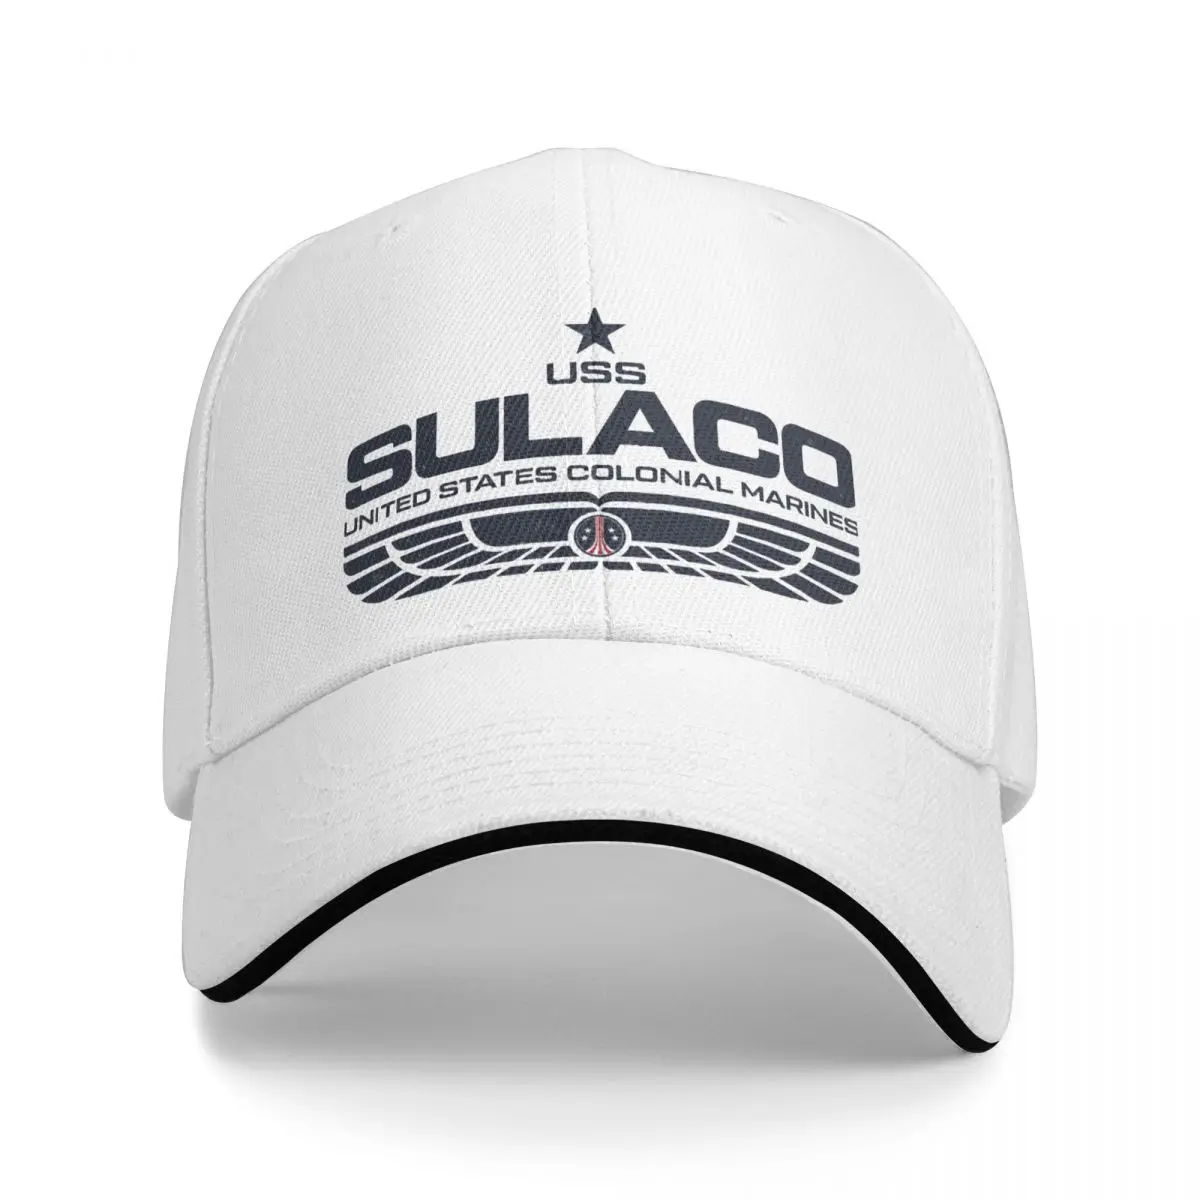 

Кепка-бейсболка USS Sulaco, аксессуары, винтажная Кепка-бейсболка Alien Weyland yu800 для мужчин и женщин, Всесезонная Кепка